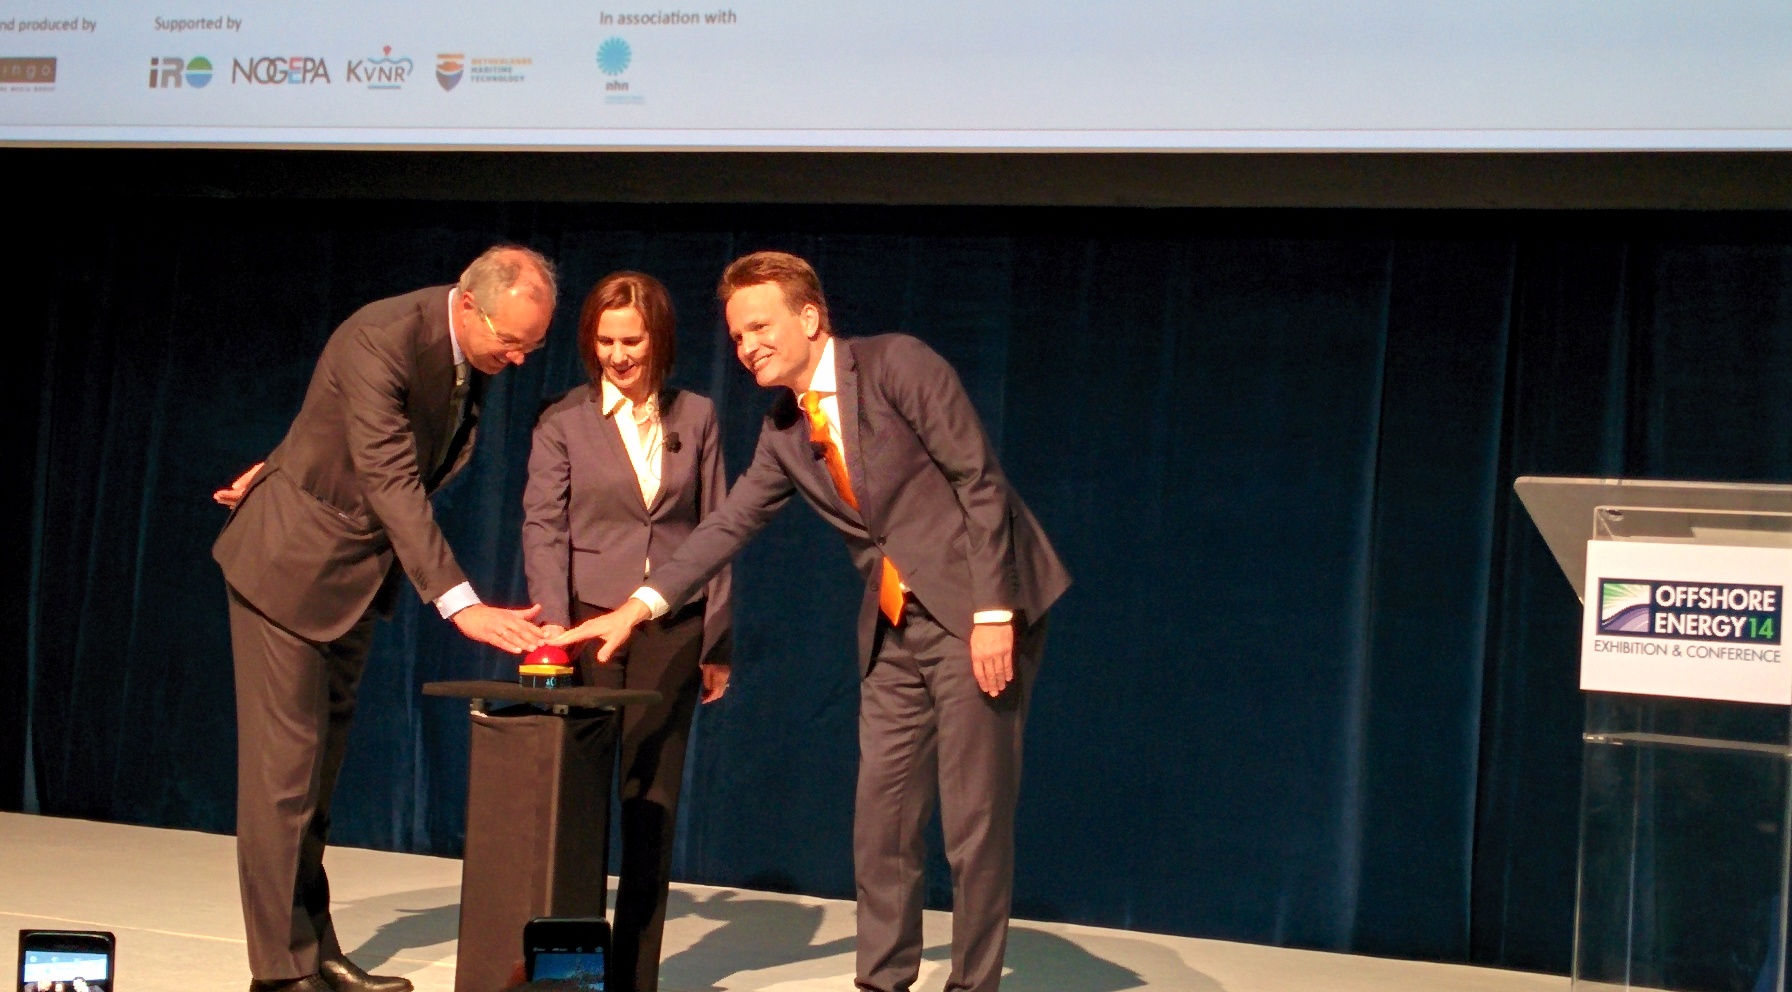 Offshore Energy 2014 Kicks Off in Amsterdam